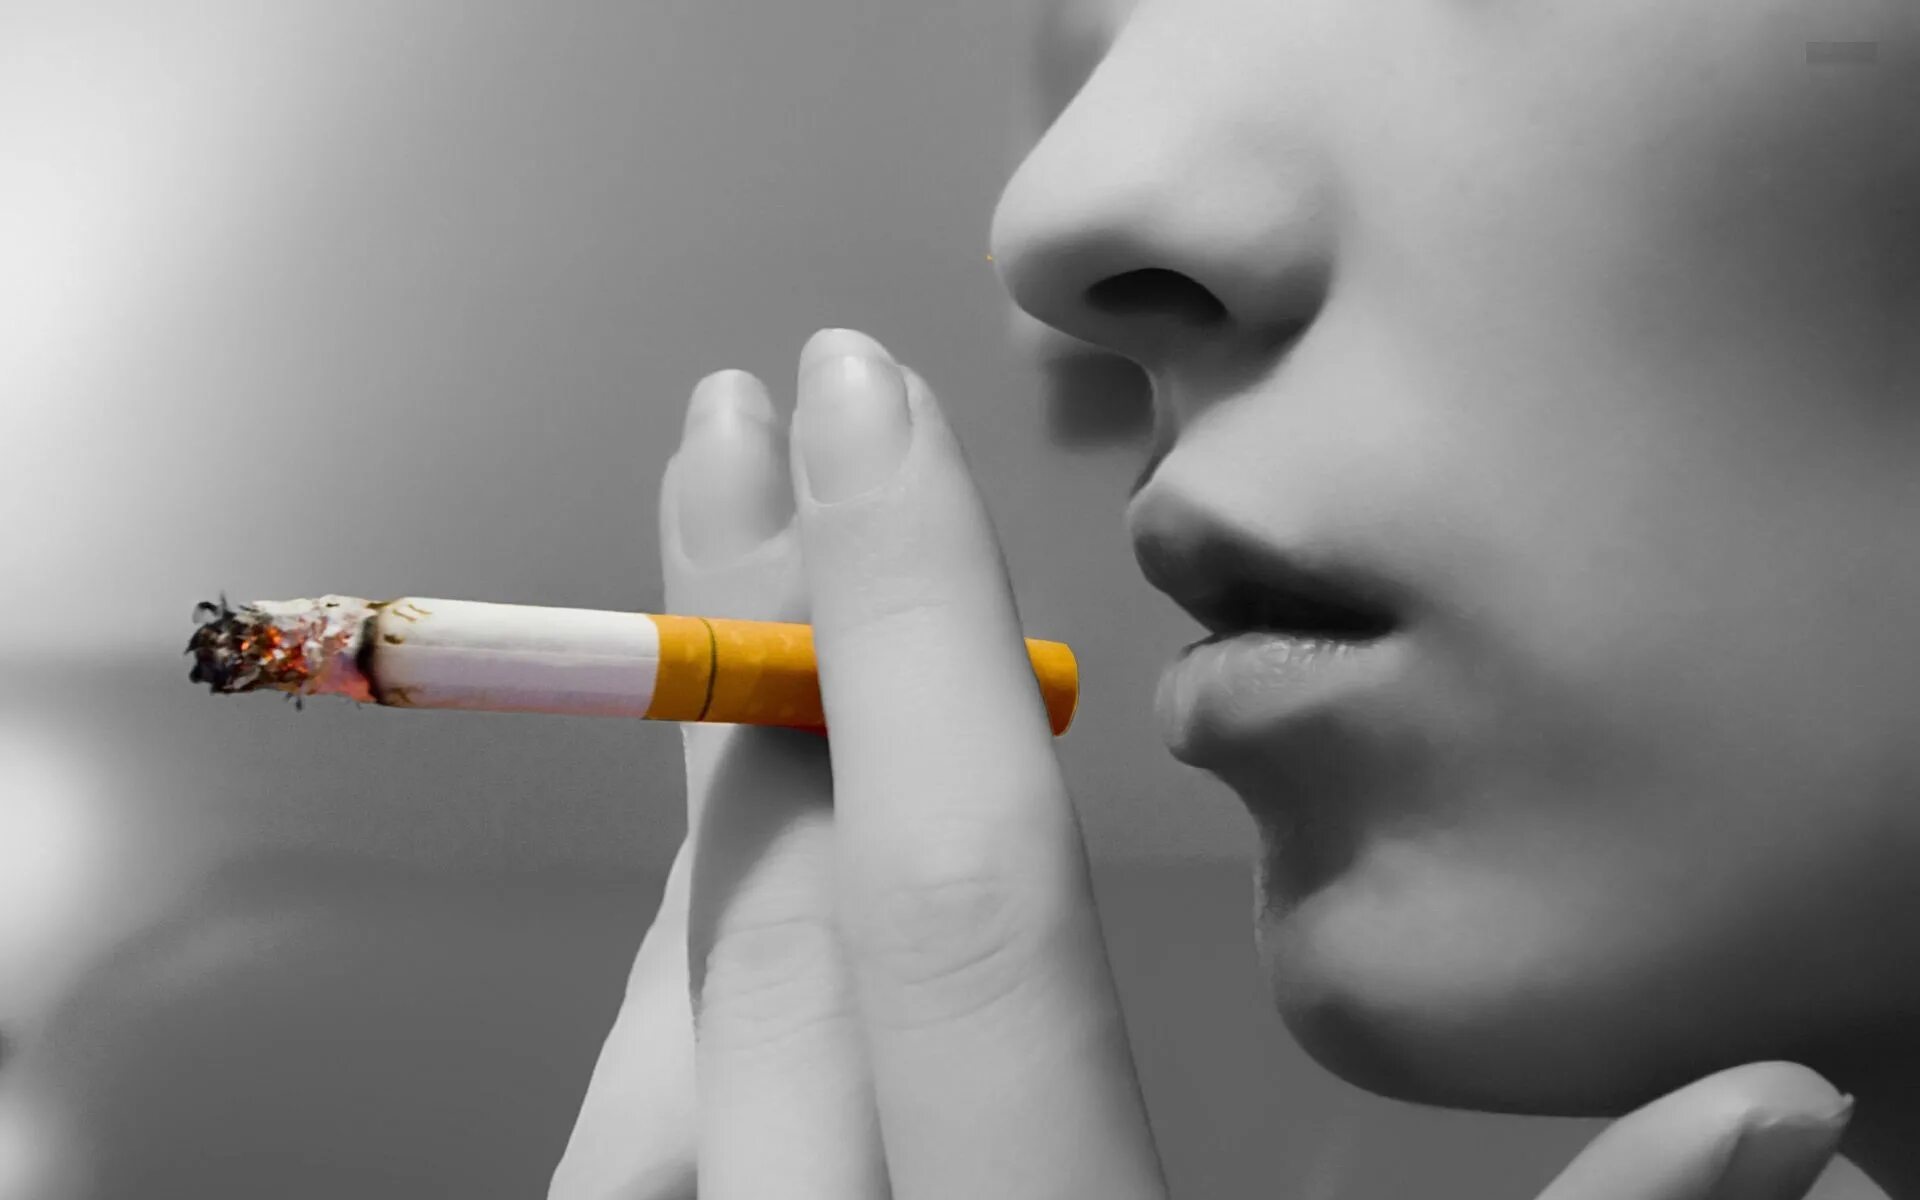 Курение табака. Курит сигарету. Вредные привычки сигареты.